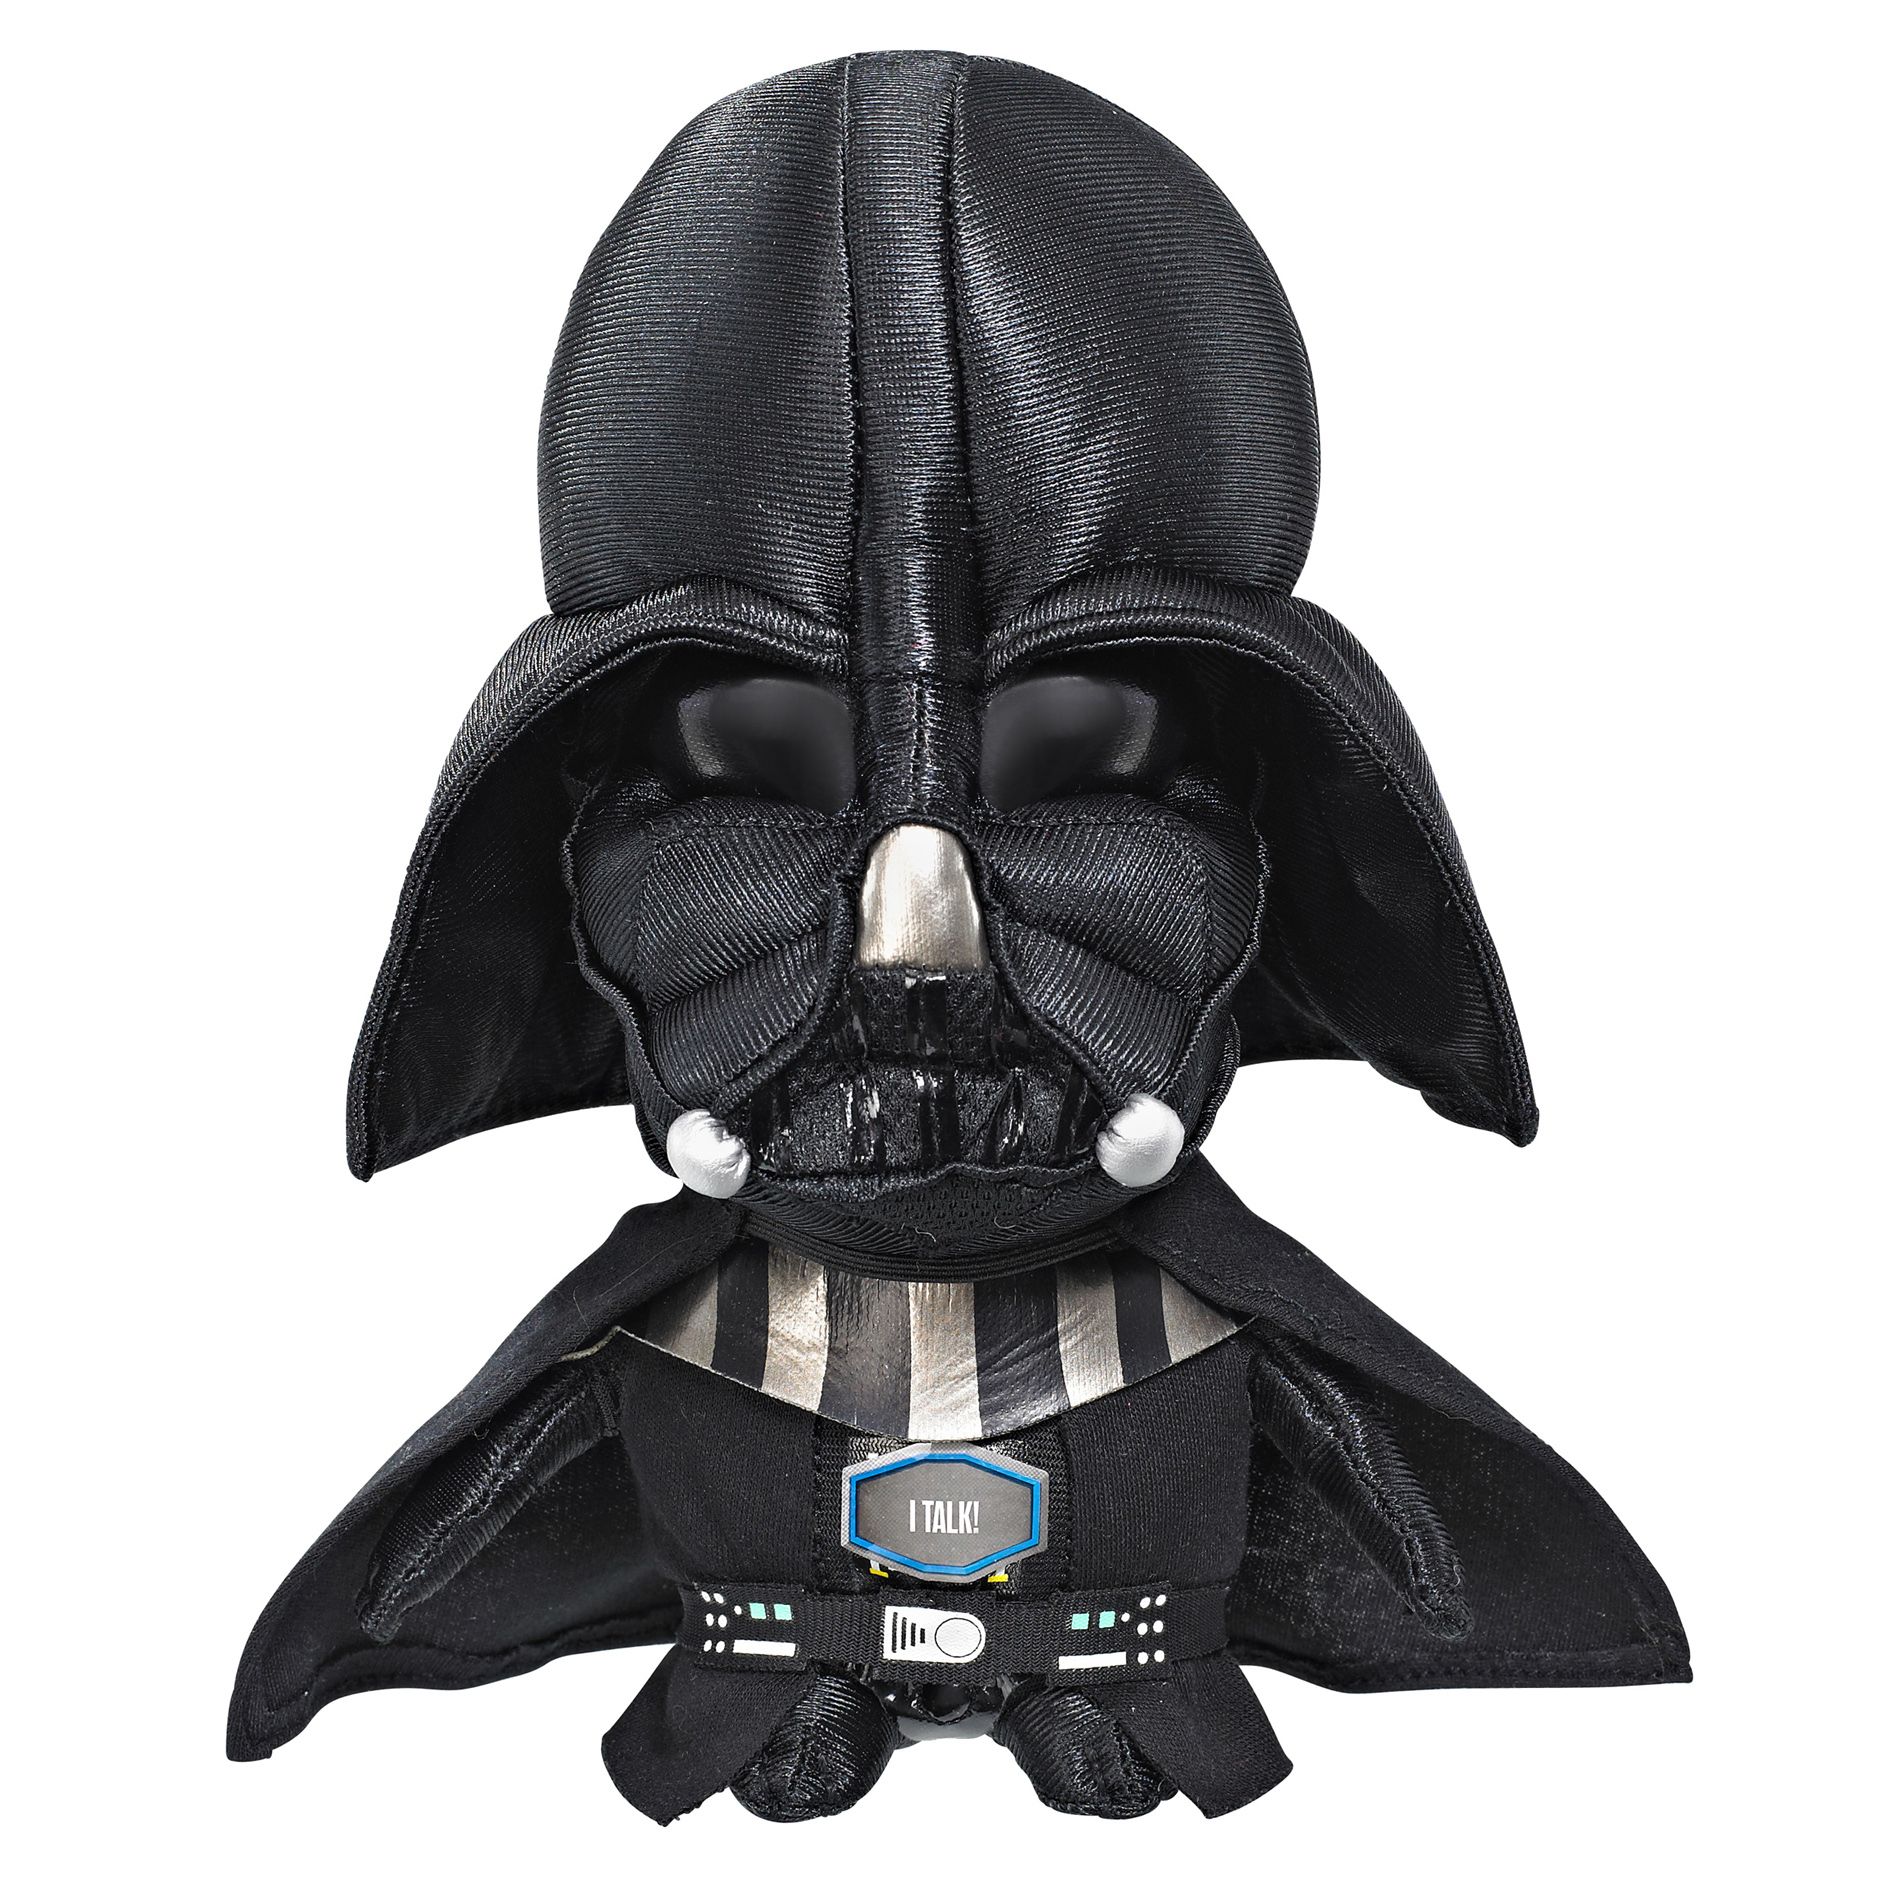 Disney Star Wars Darth Vader 9-inch Talking Plush